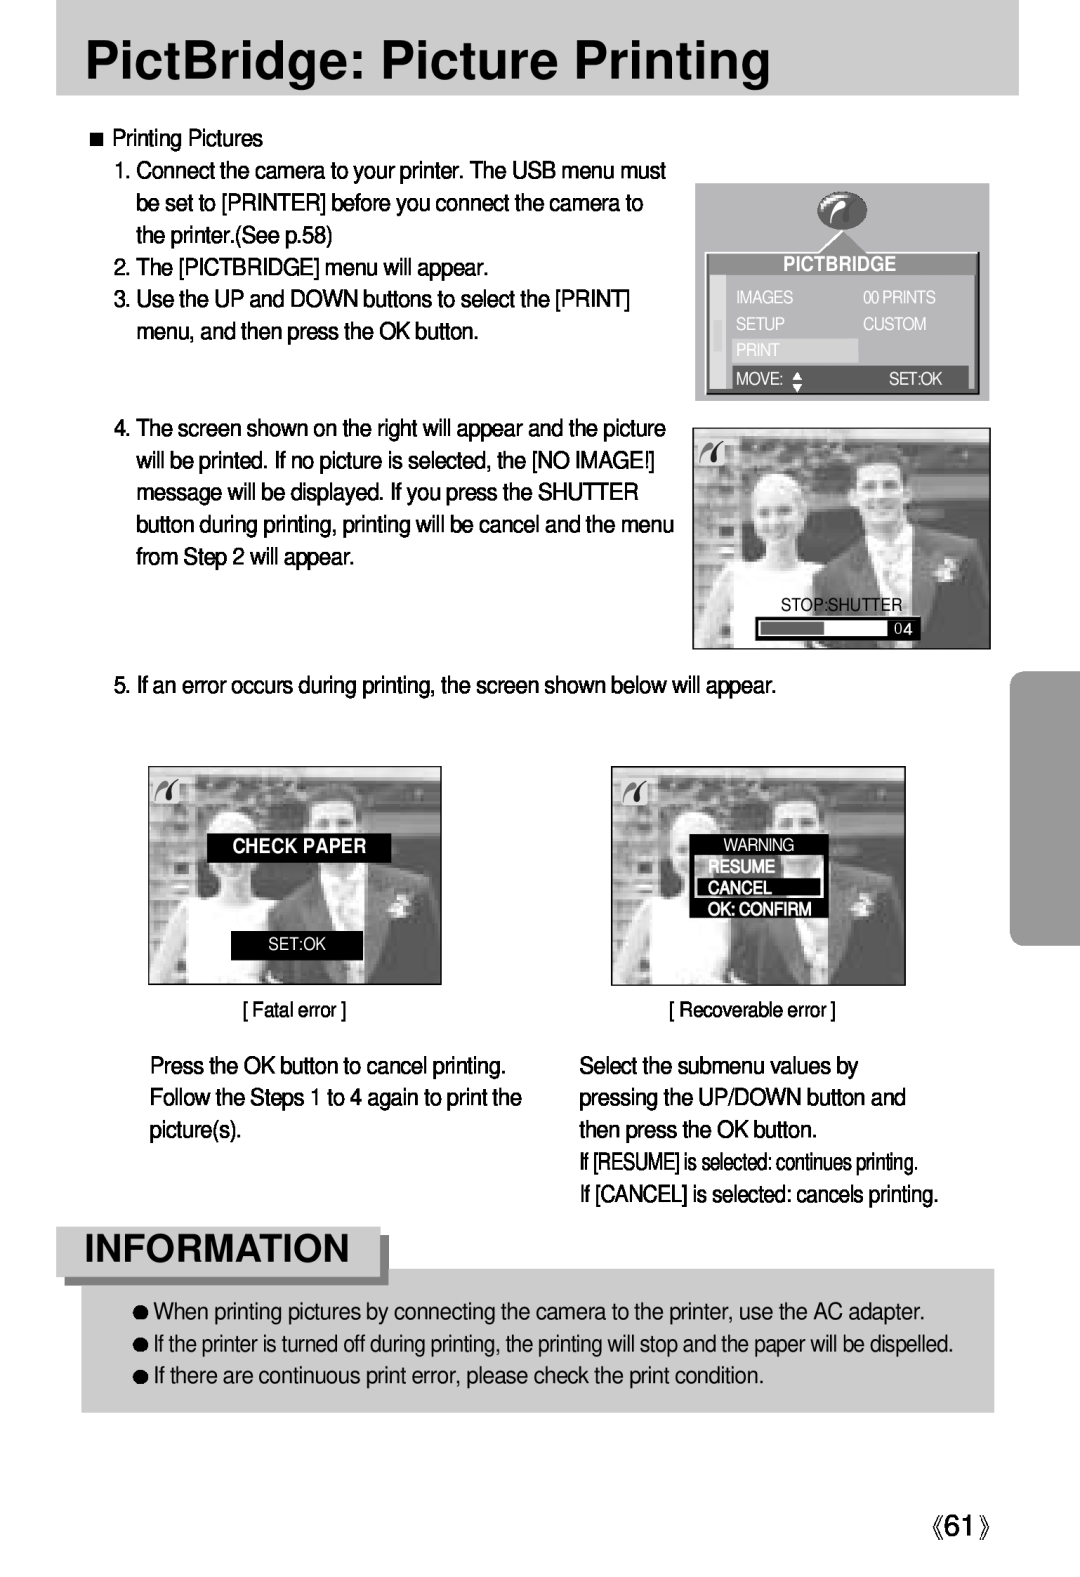 Samsung Digimax U-CA user manual PictBridge Picture Printing, Information, Fatal error, Recoverable error 